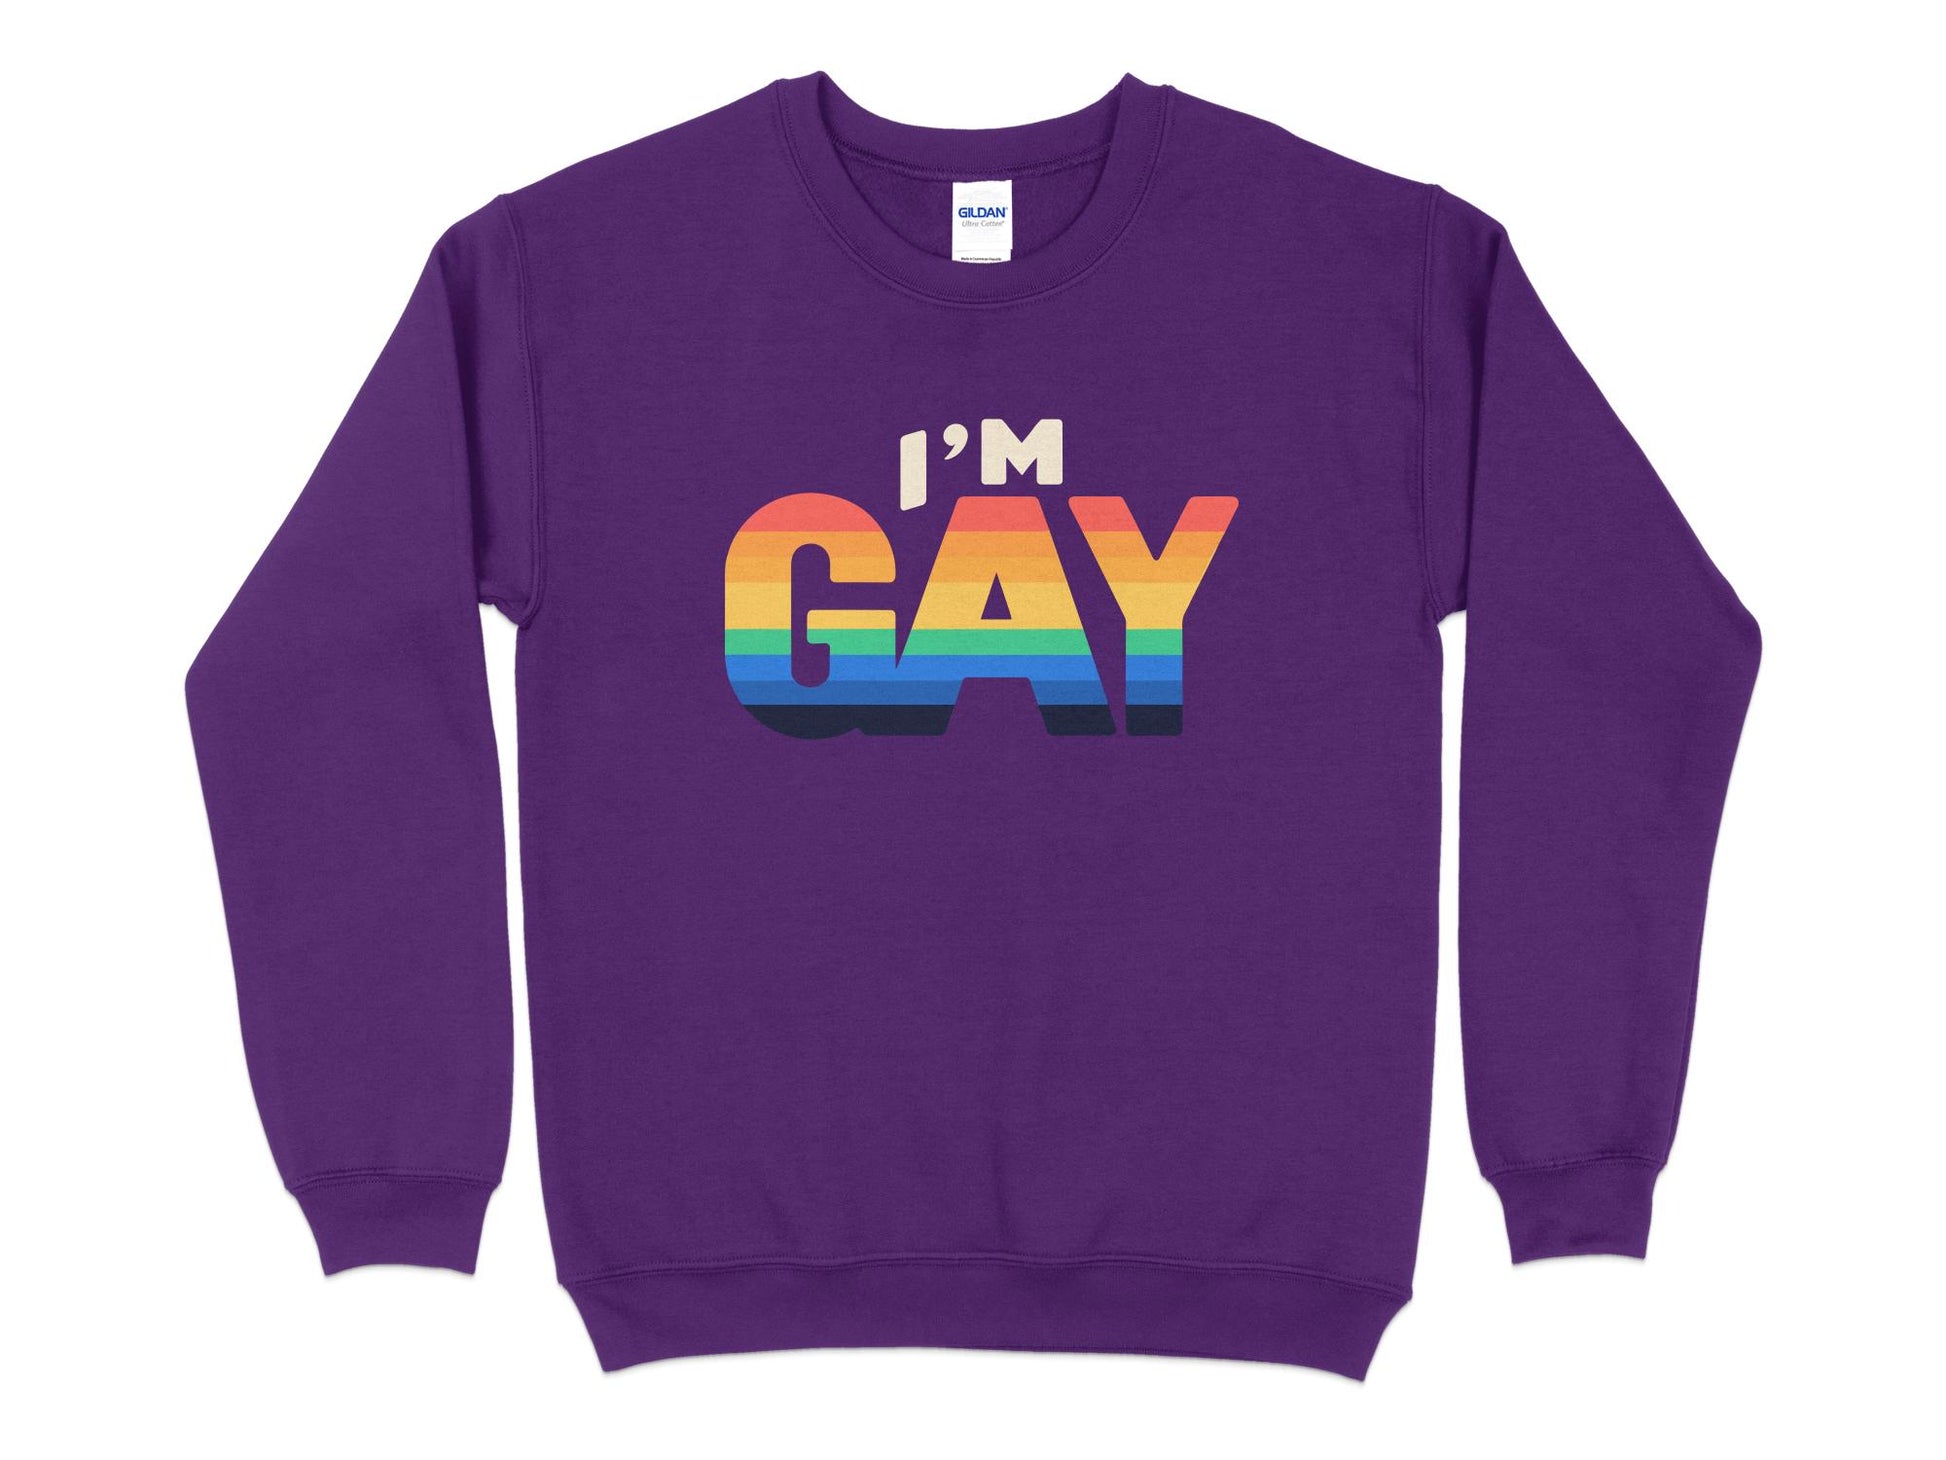 I'm Gay Sweatshirt, purple